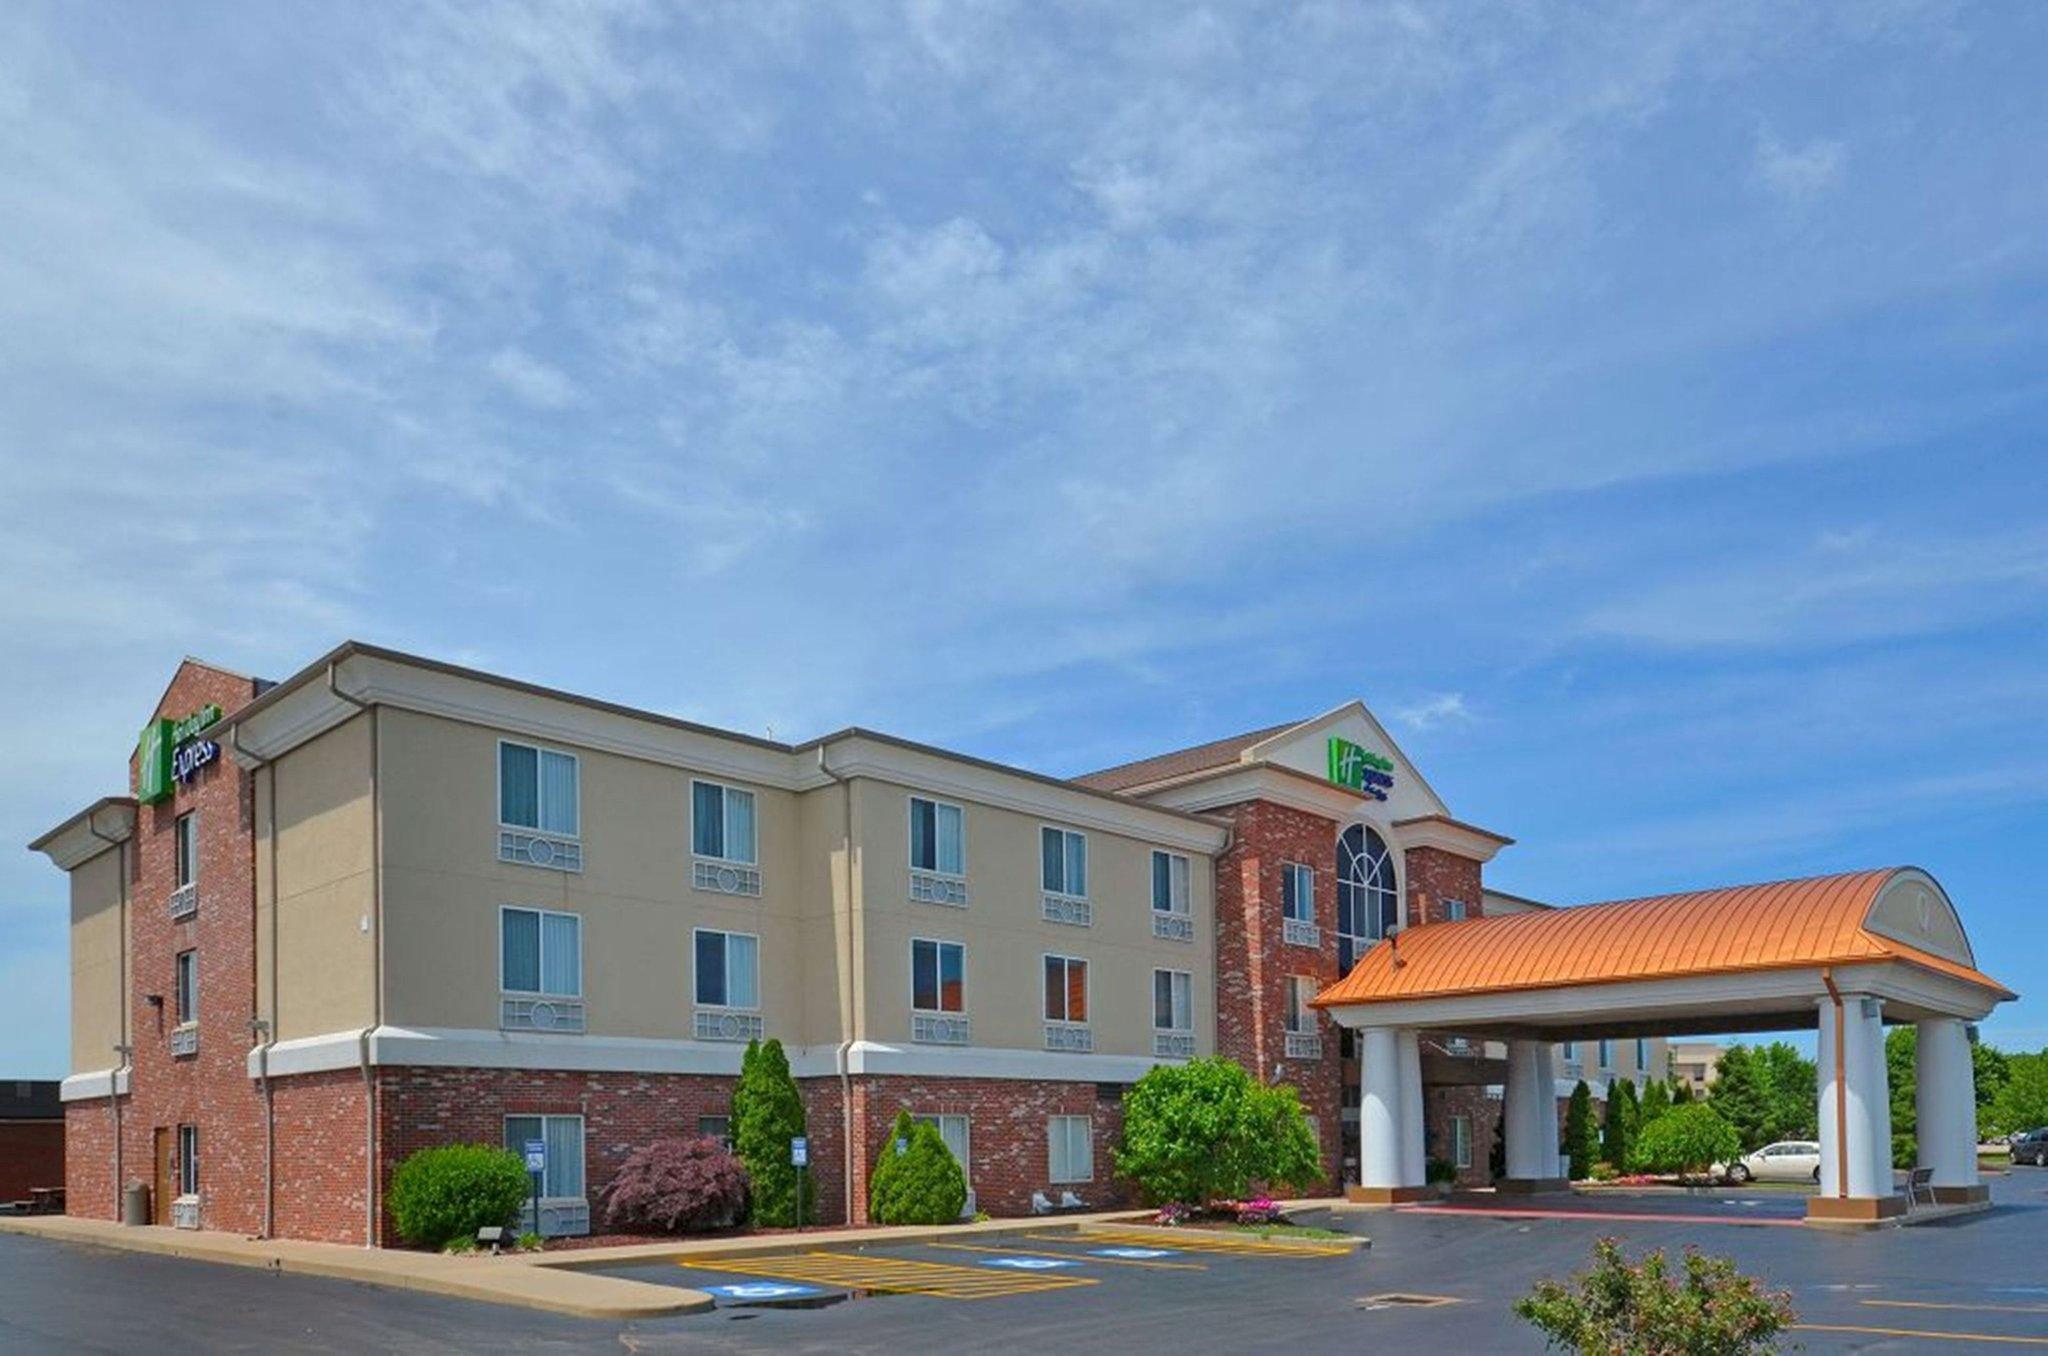 Holiday Inn Express Hotel & Suites Farmington - Farmington, MO